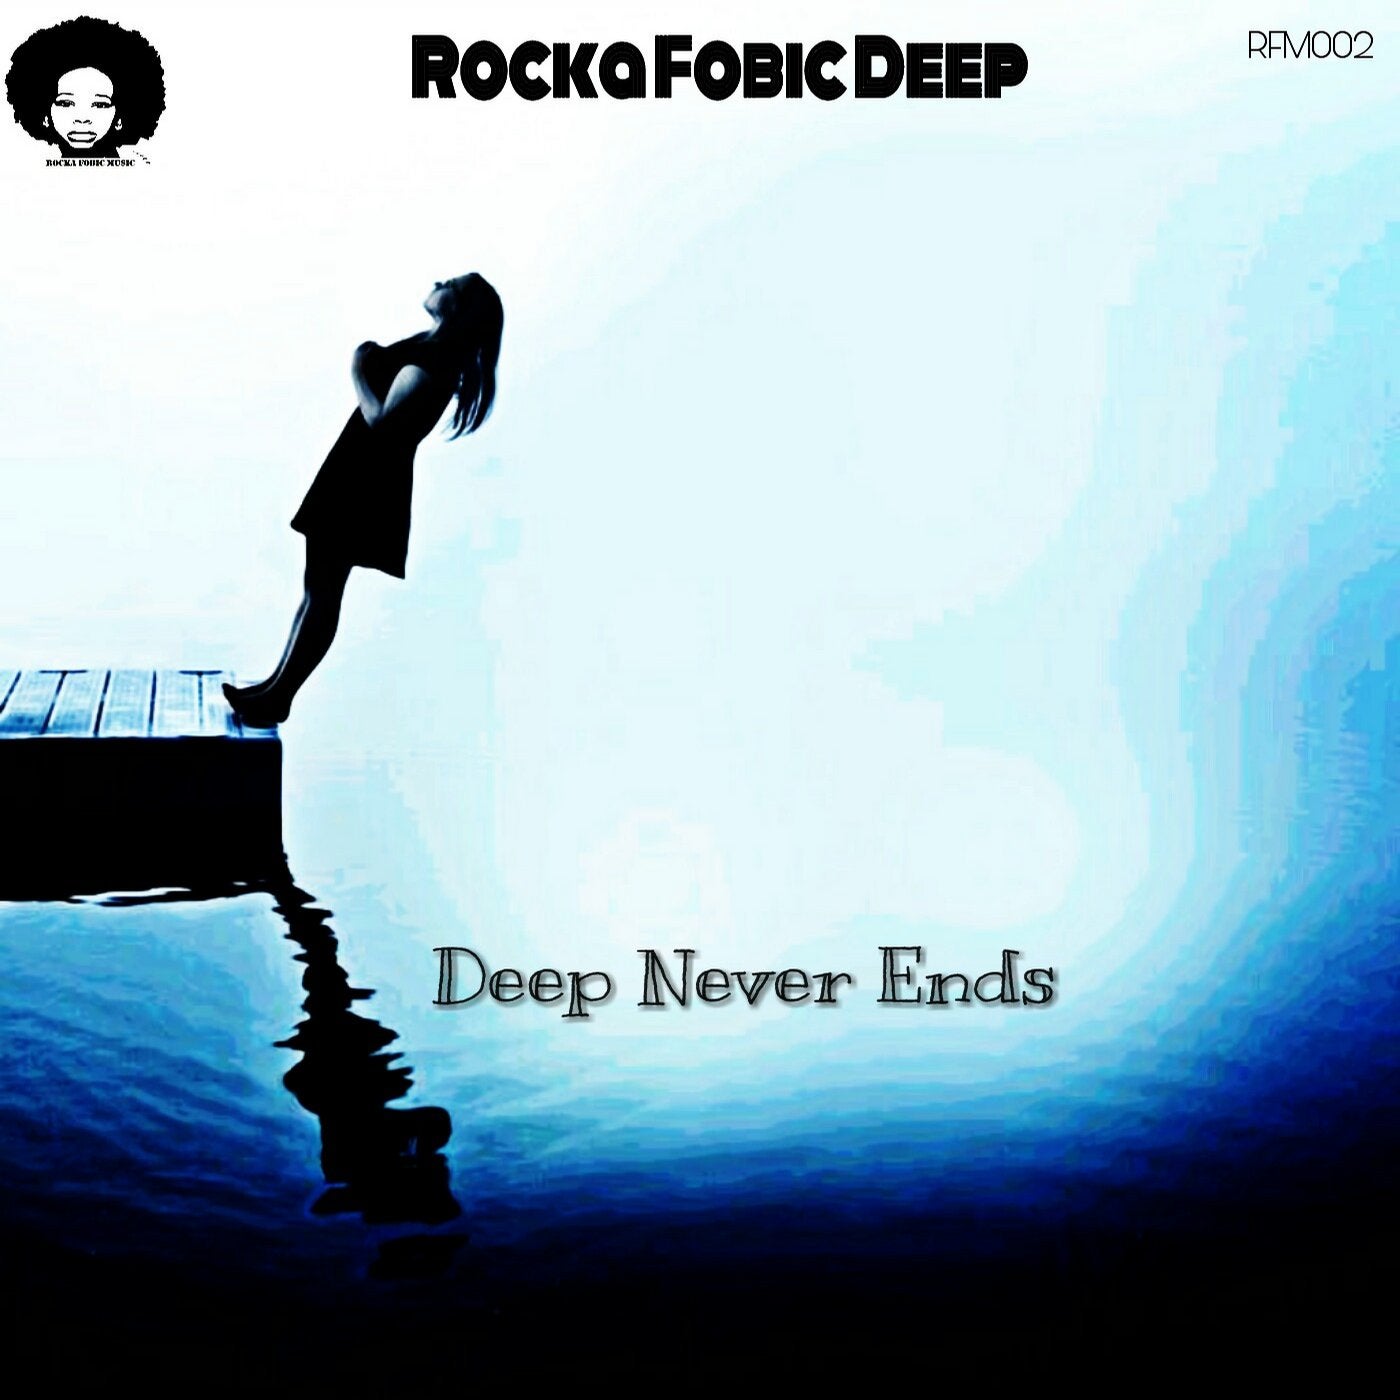 Deep Never Ends (Original Mix)